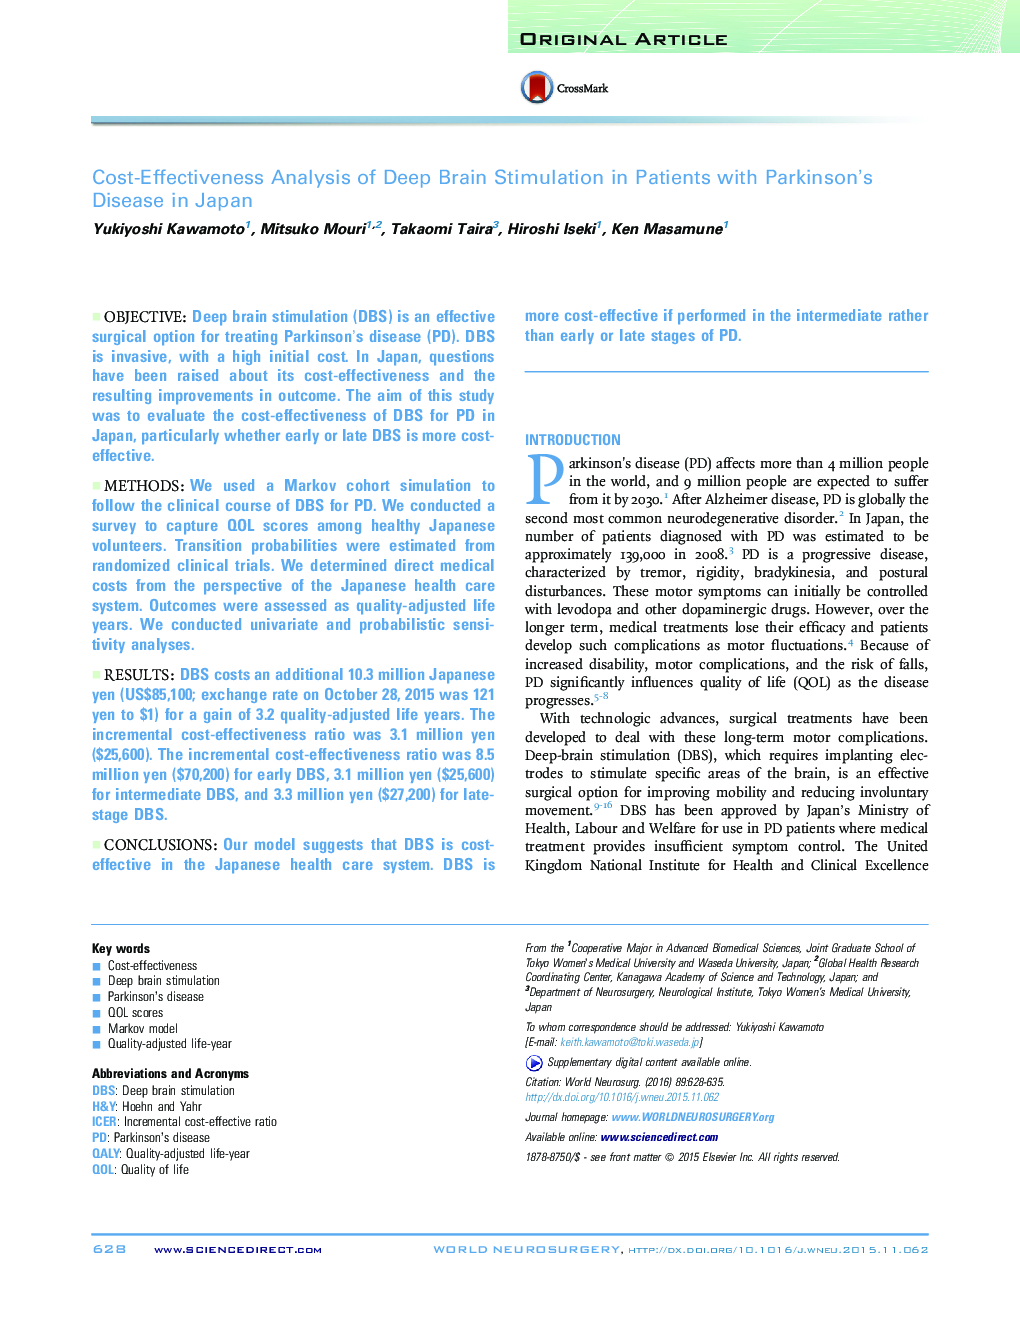 Original ArticleCost-Effectiveness Analysis of Deep Brain Stimulation in Patients with ParkinsonÊ¼s Disease in Japan